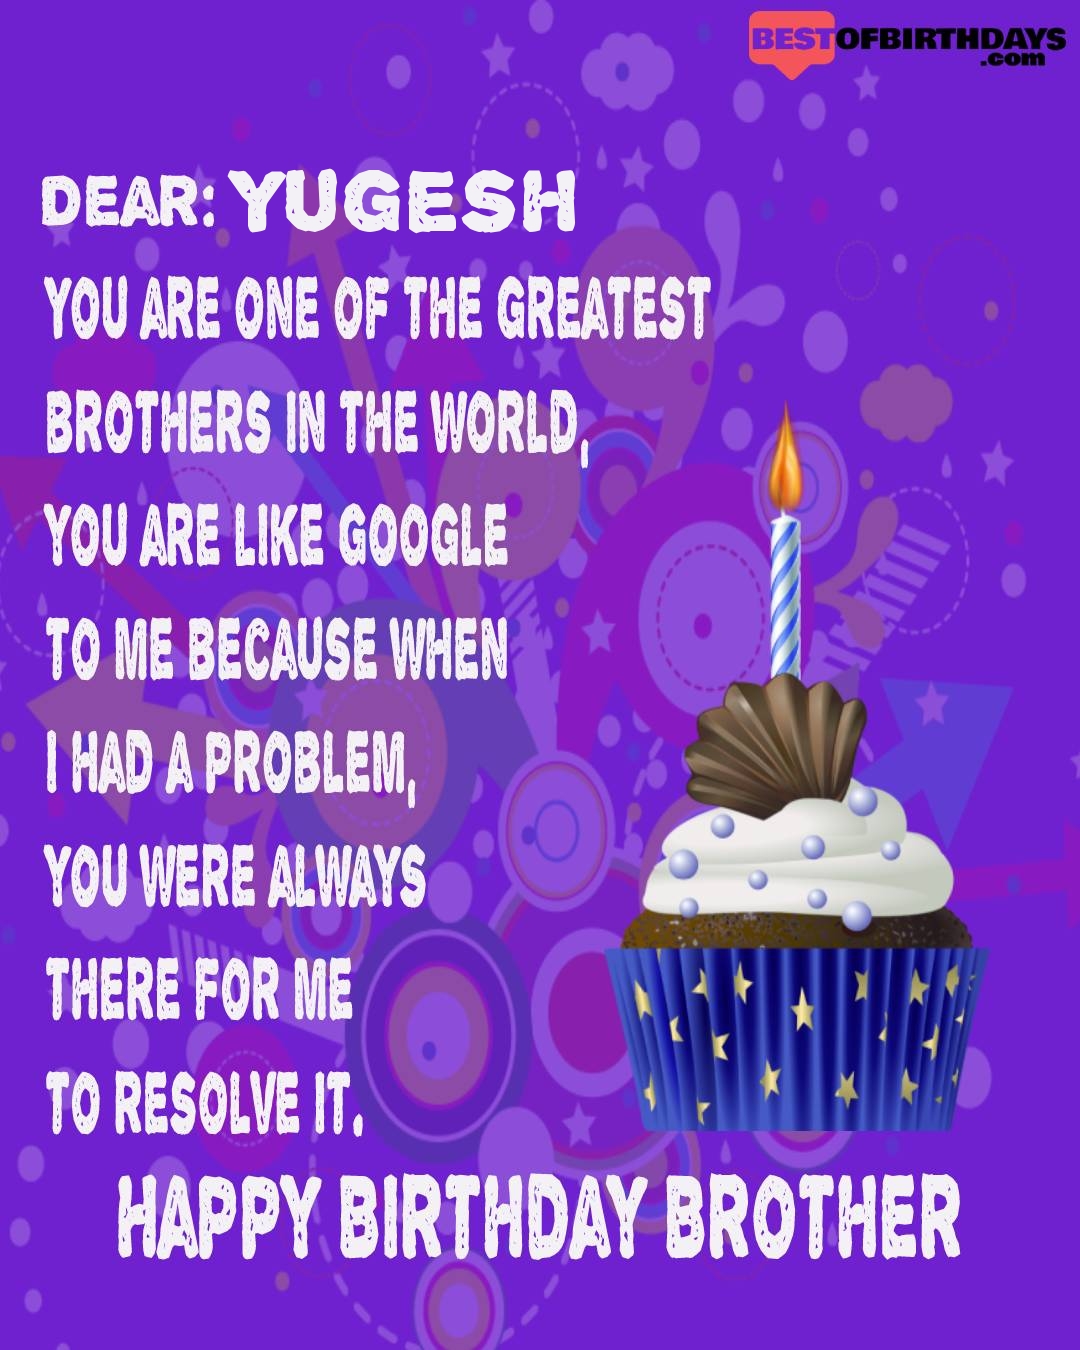 Happy birthday yugesh bhai brother bro